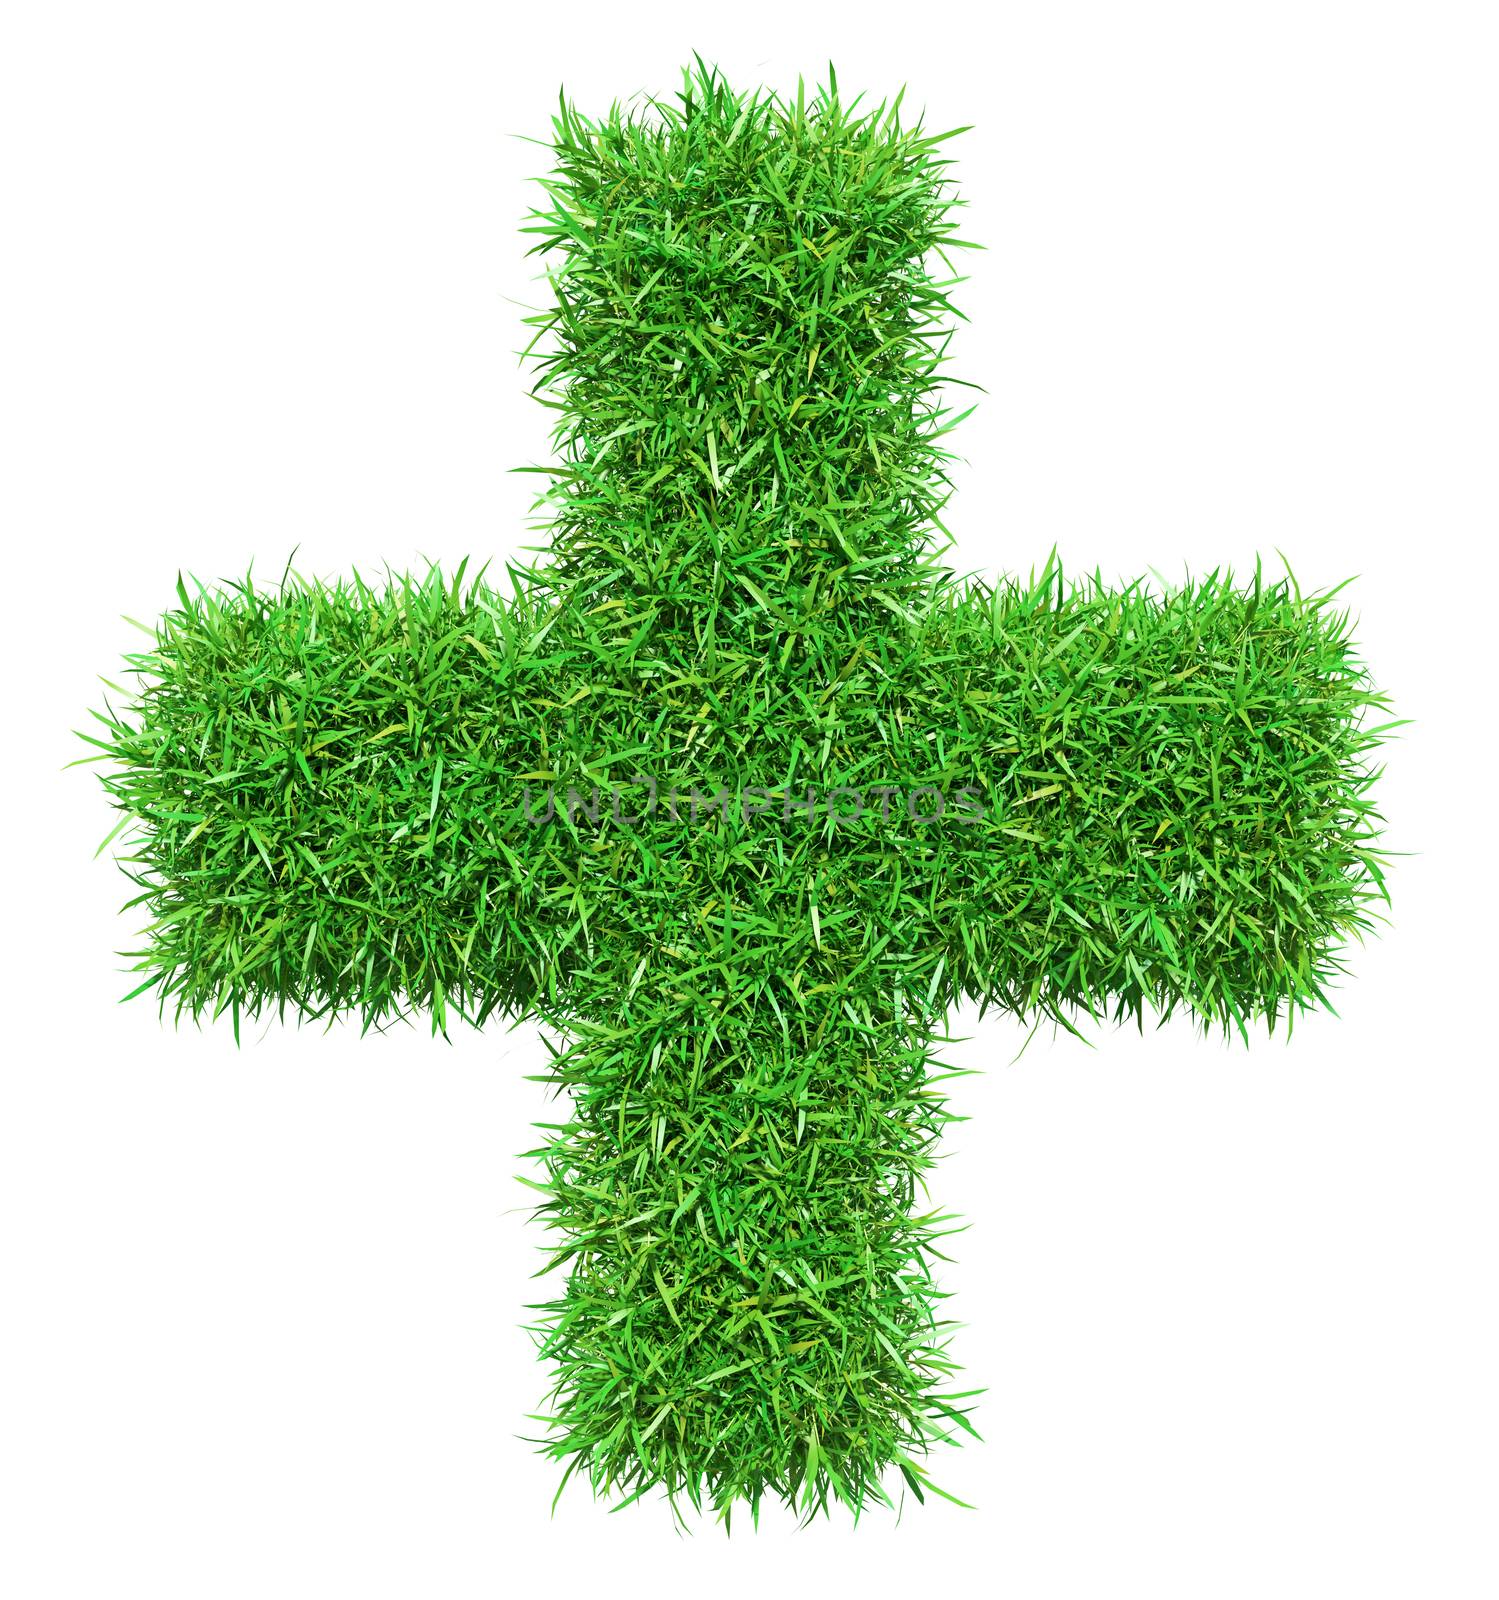 Green grass plus by cherezoff